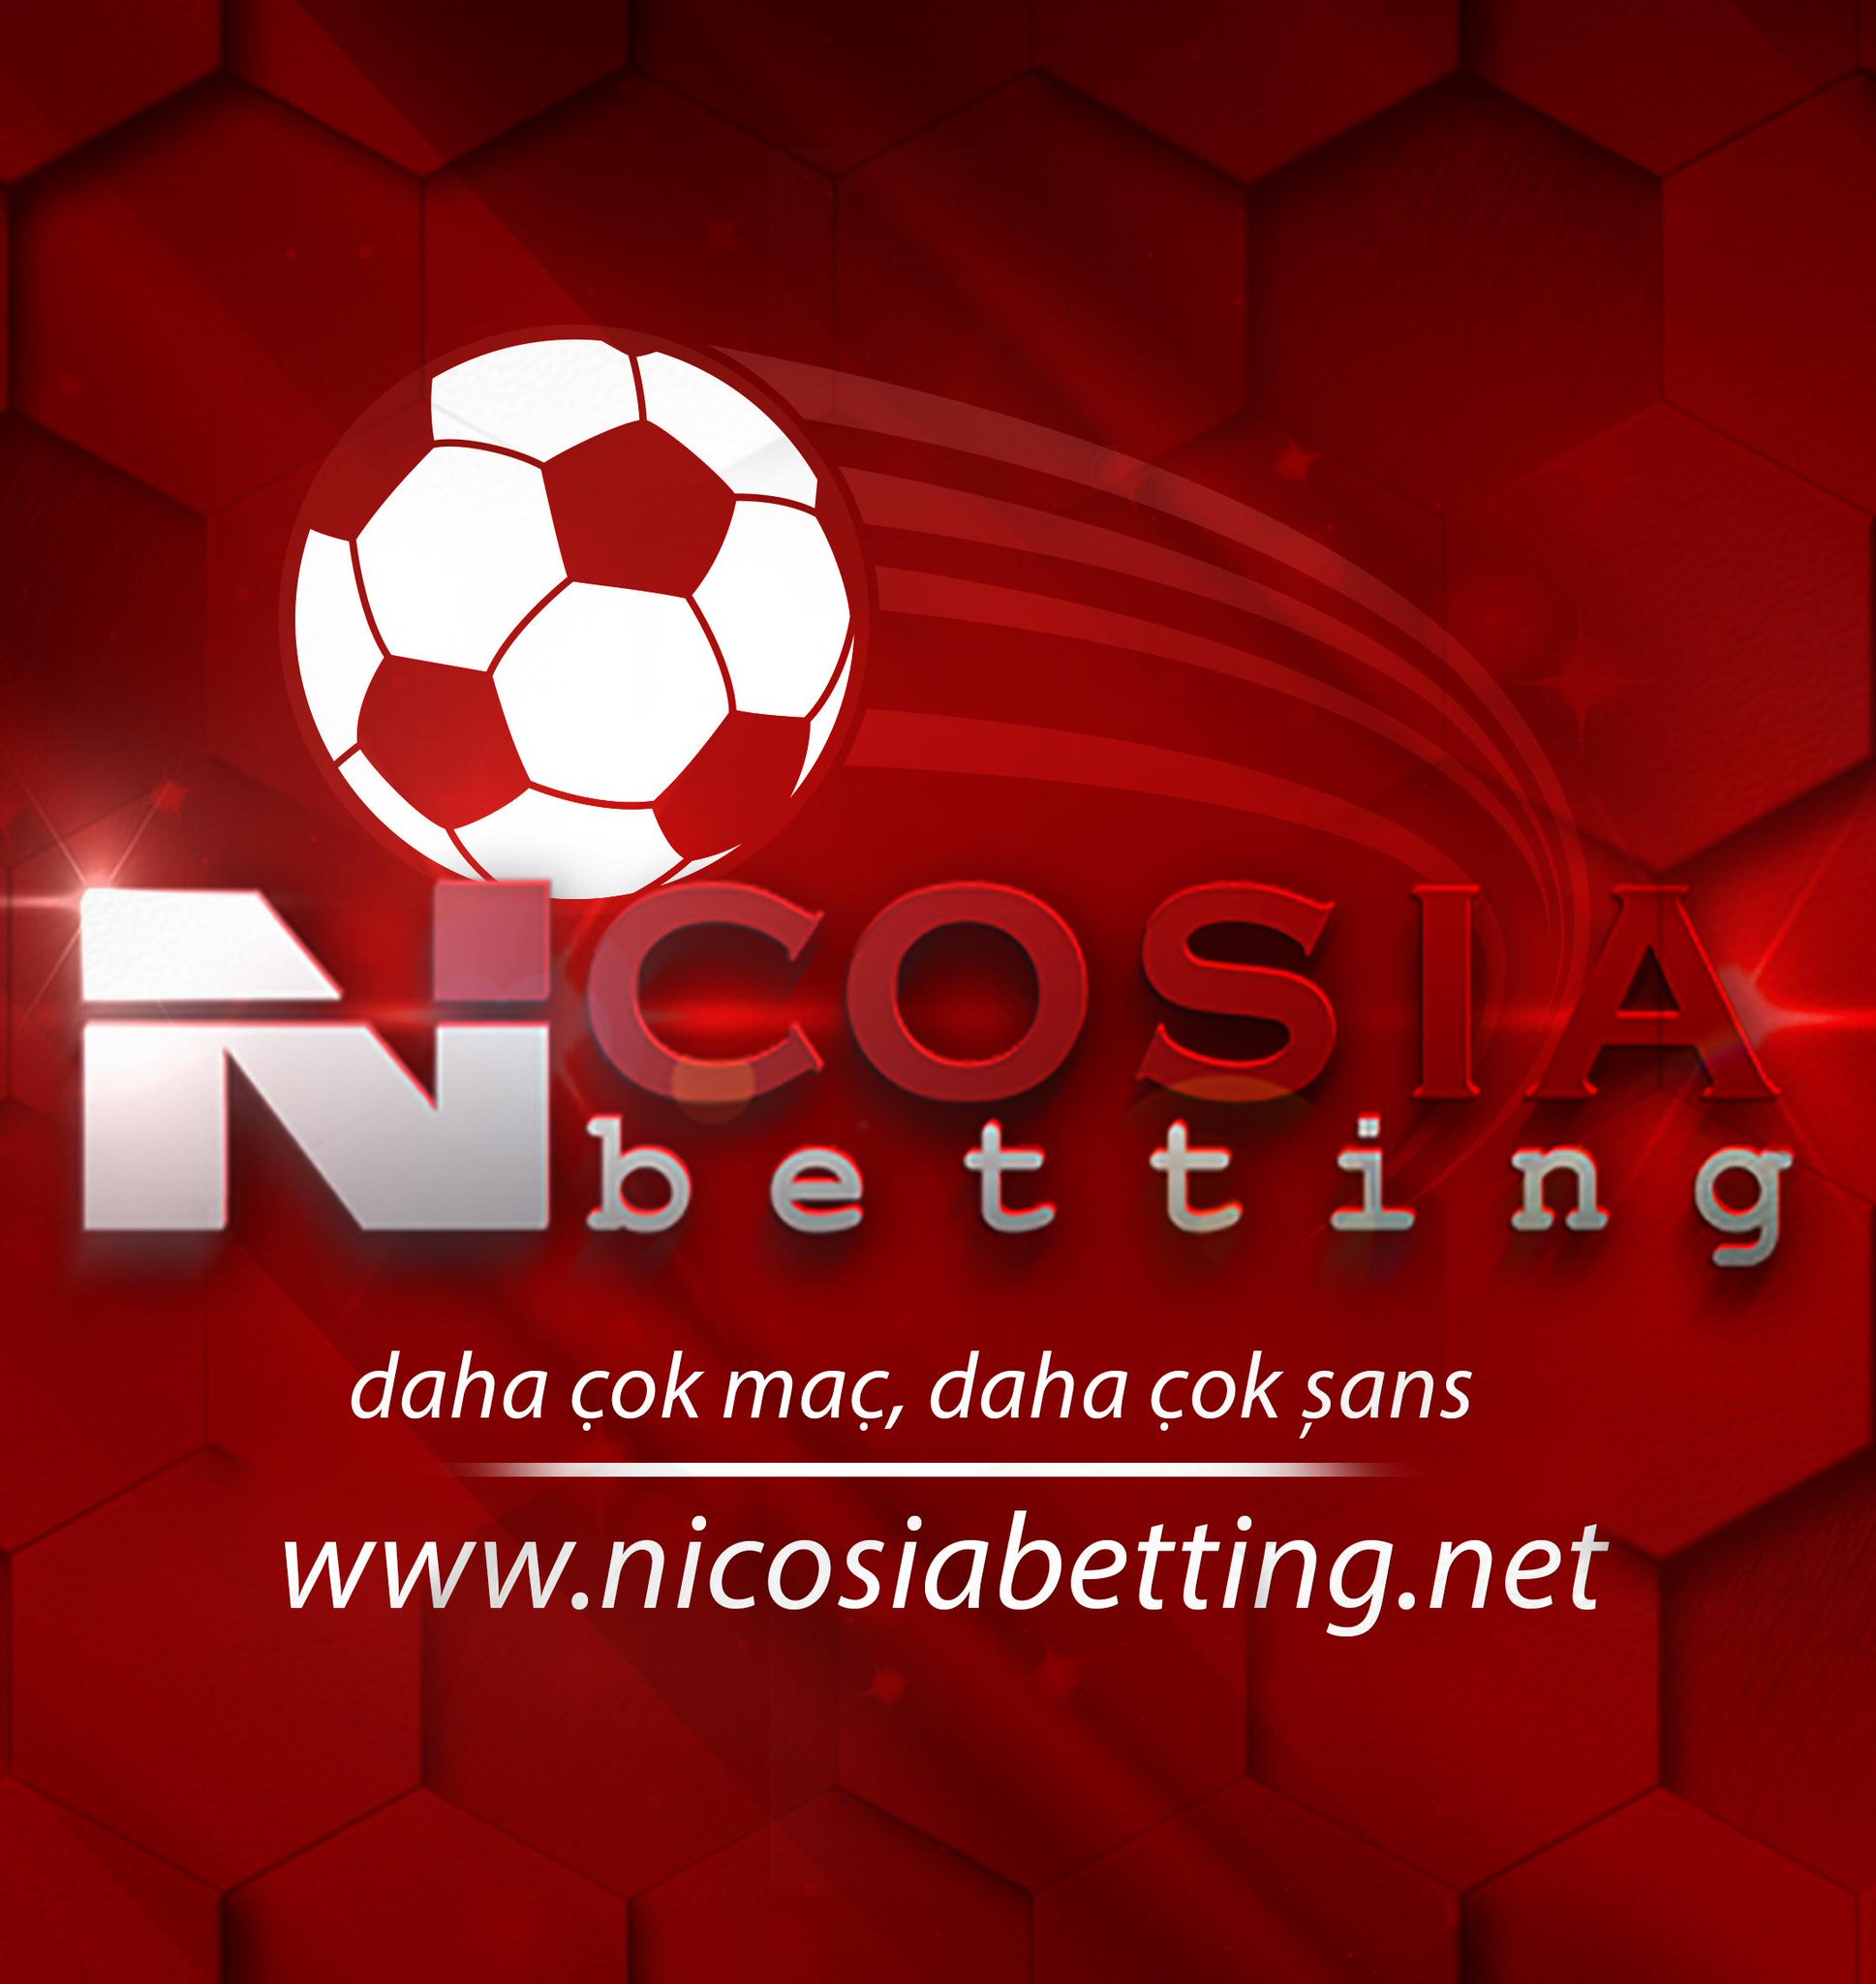 Nicosia betting mmcis forex peace army exential dubai